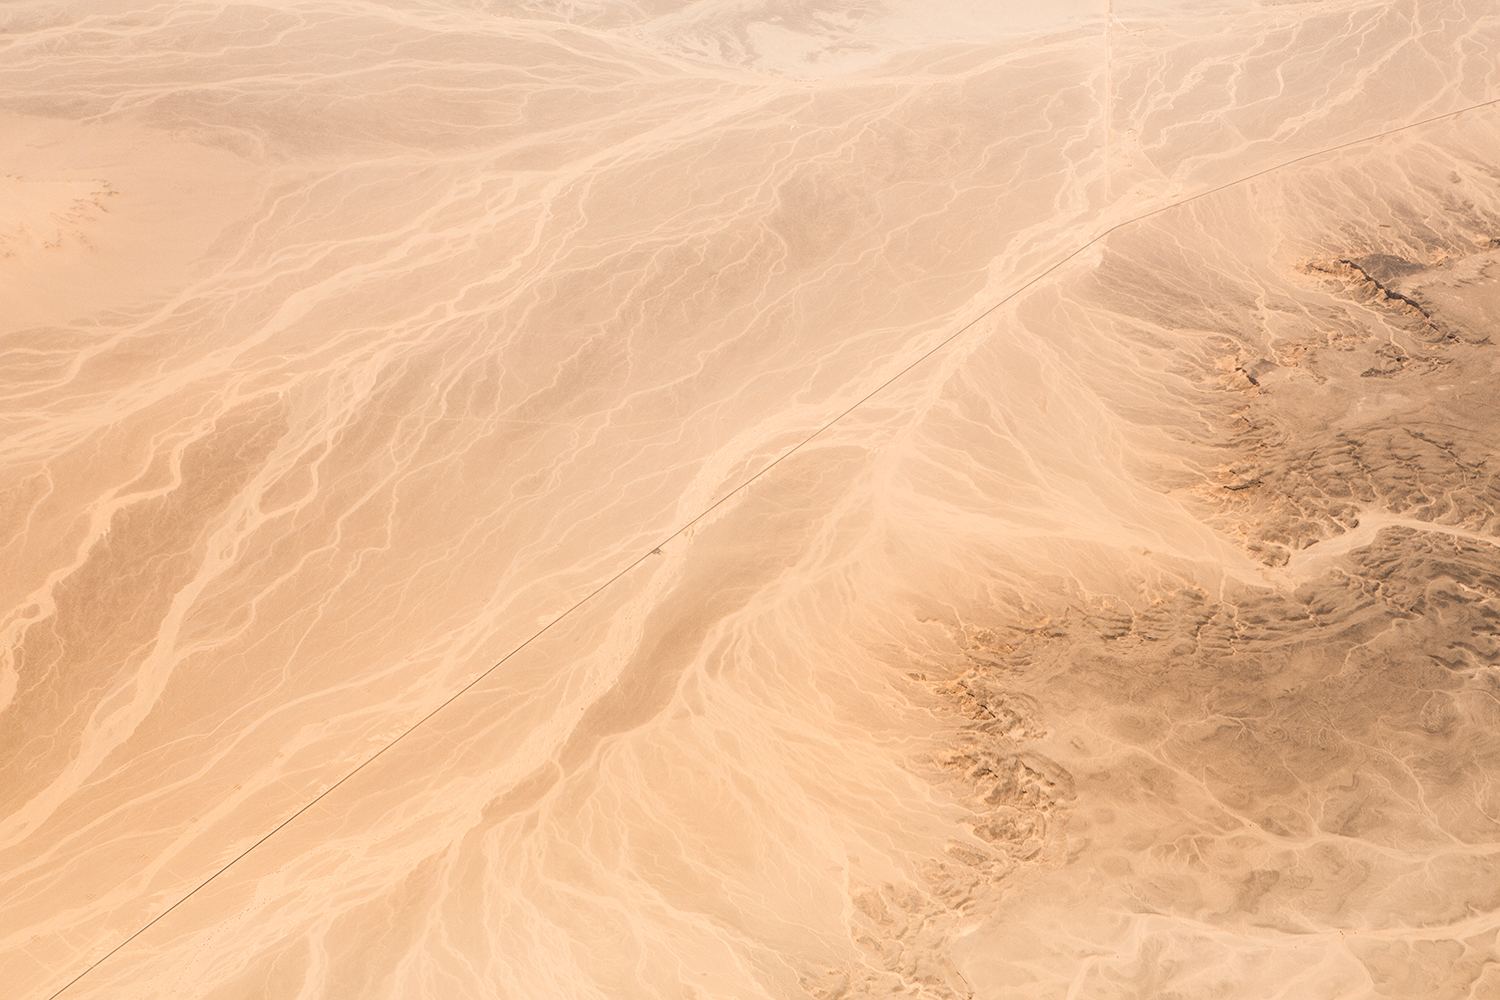  Deserts IV, 2015 //  120 cm x 180 cm  